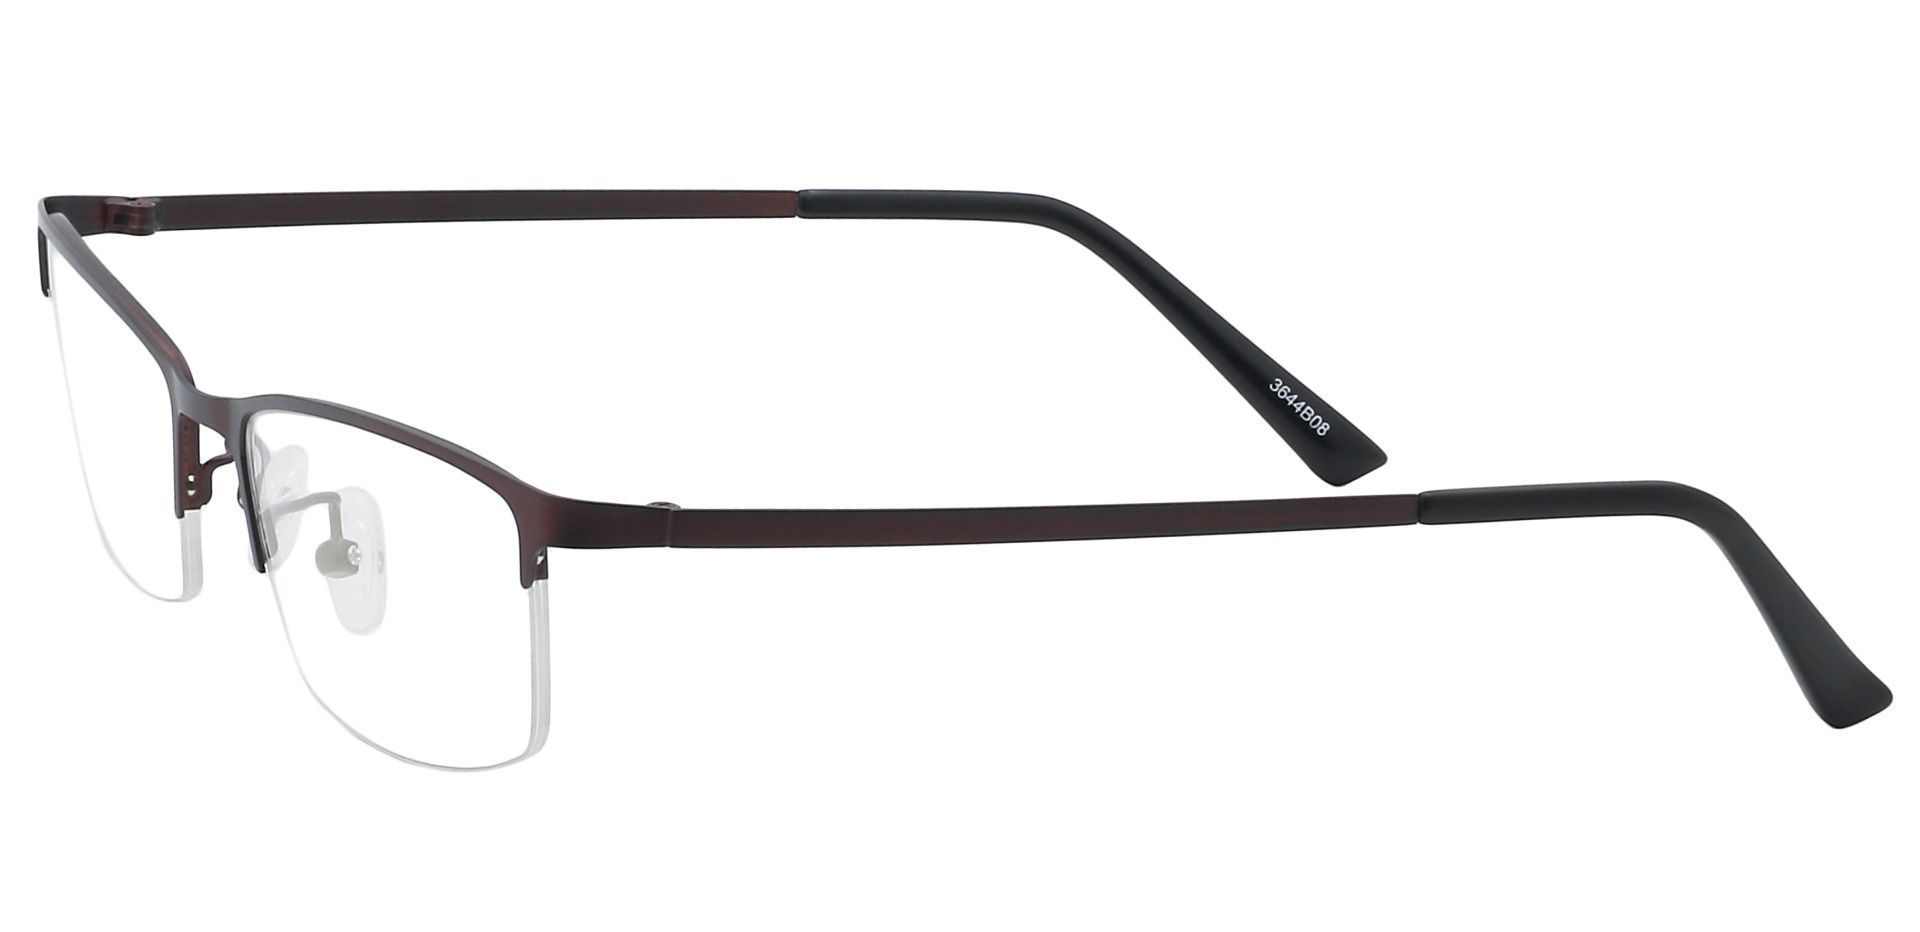 Parsley Rectangle Eyeglasses Frame - Brown